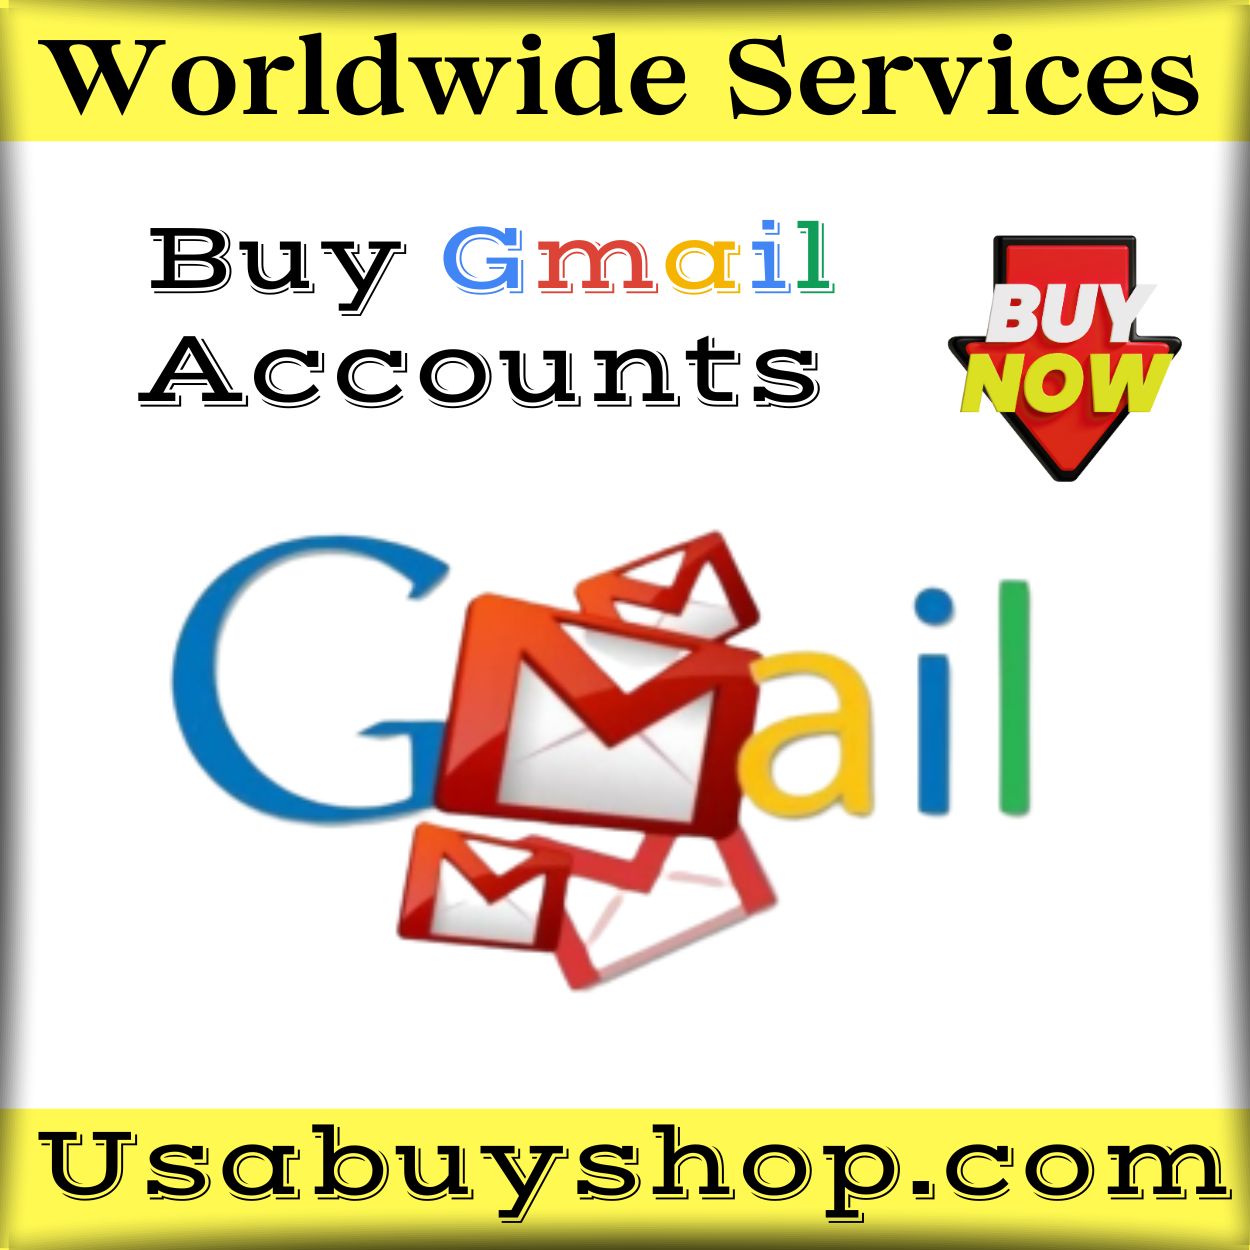 Buy Gmail Accounts - Buy Gmail PVA Accounts In Bulk